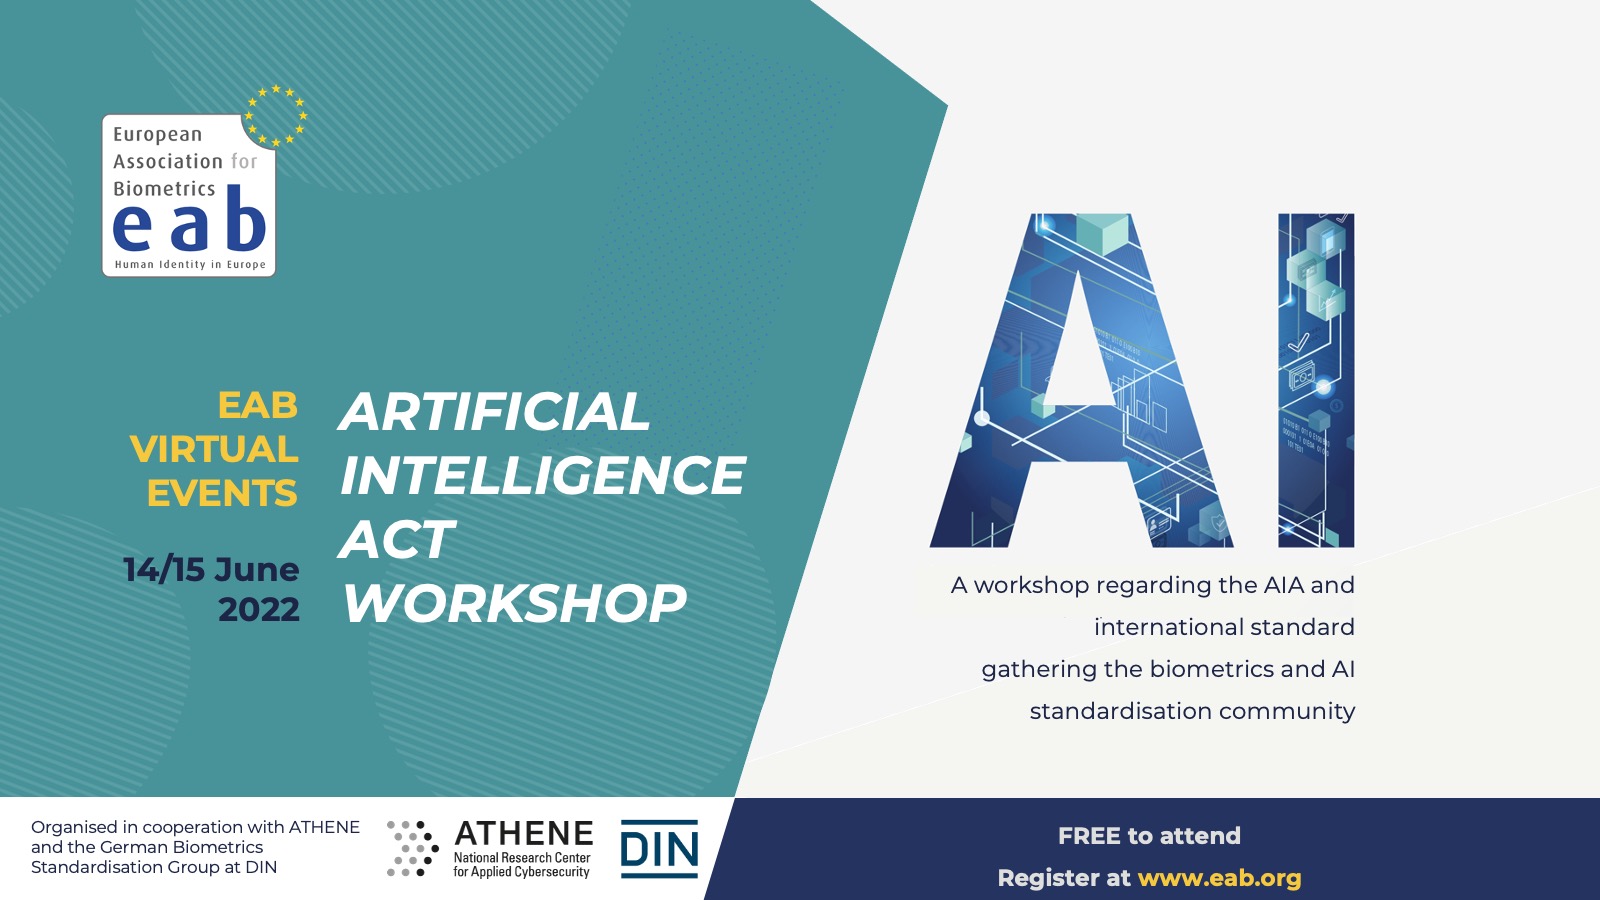 [Illustration] Banner on Artificial Intelligence Act Workshop